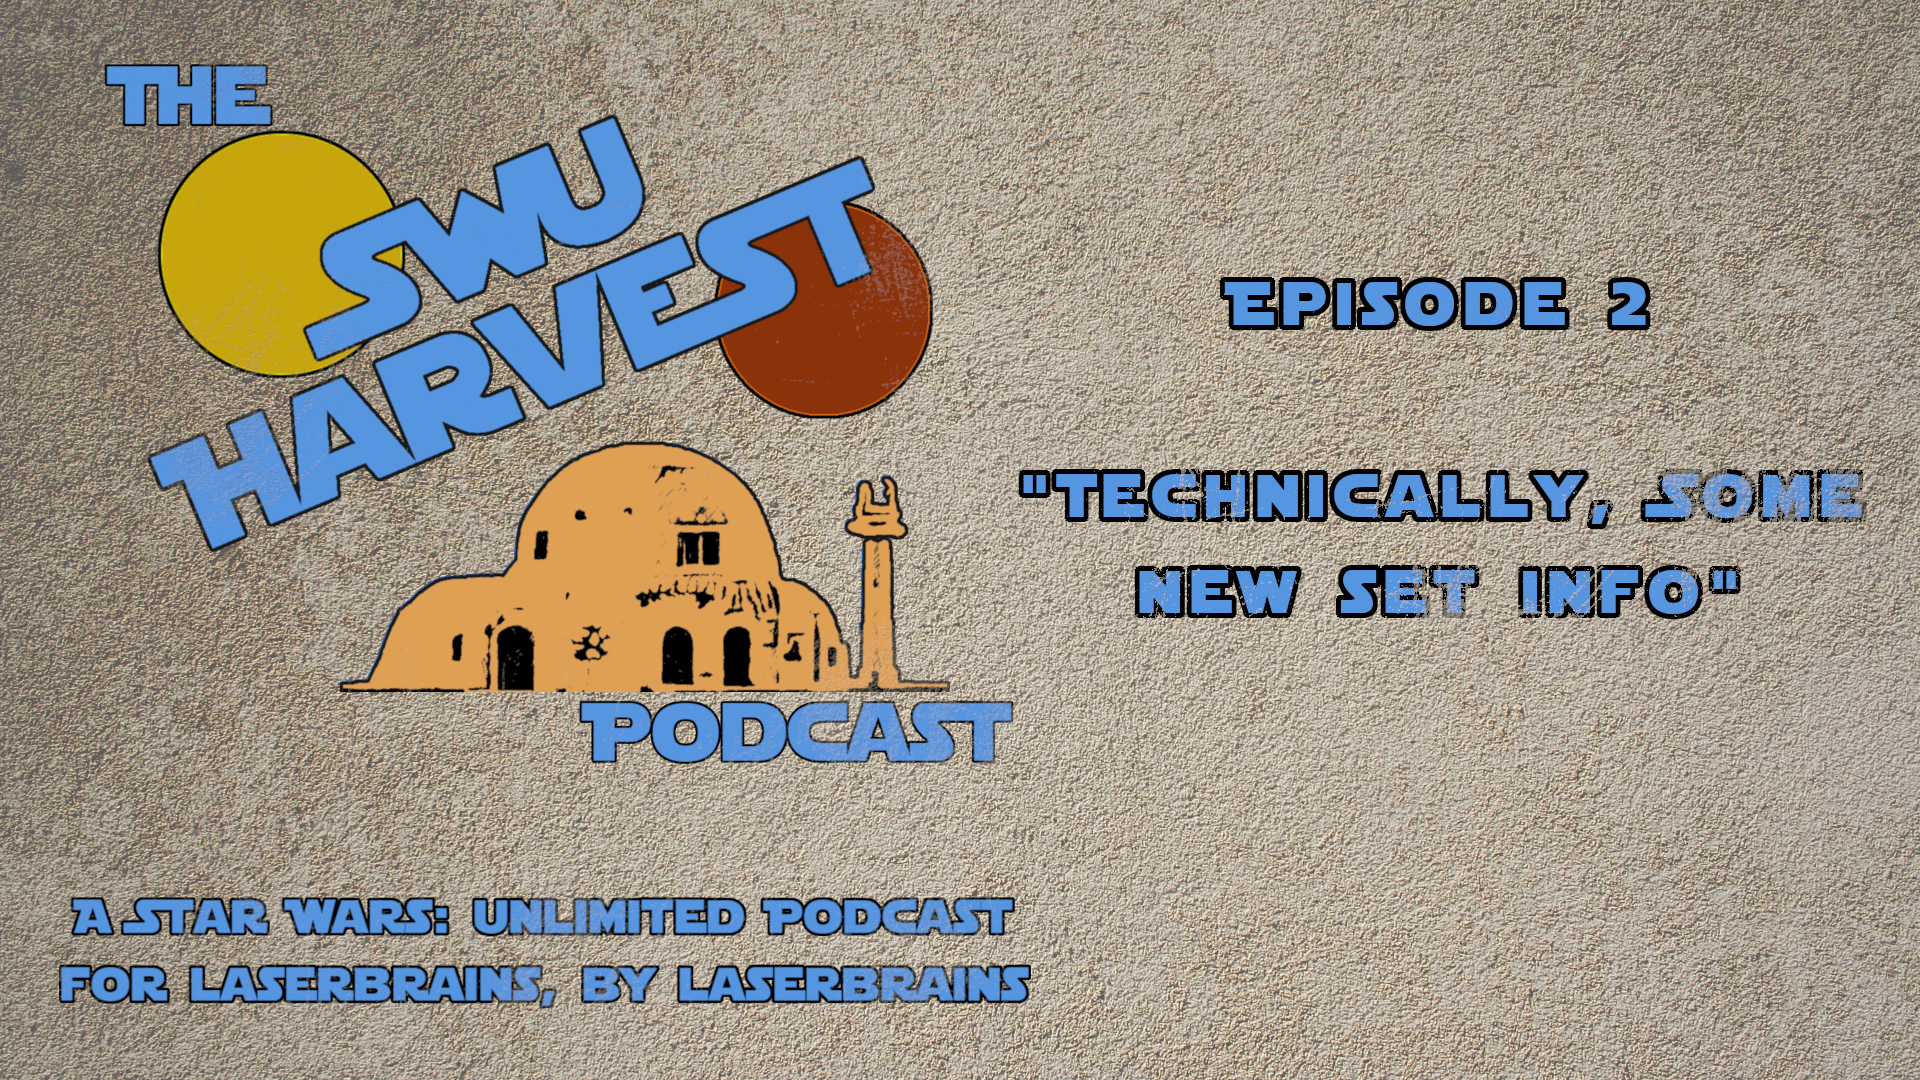 SWU Harvest Podcast Episode 2 “Technically, Some New Set Info”